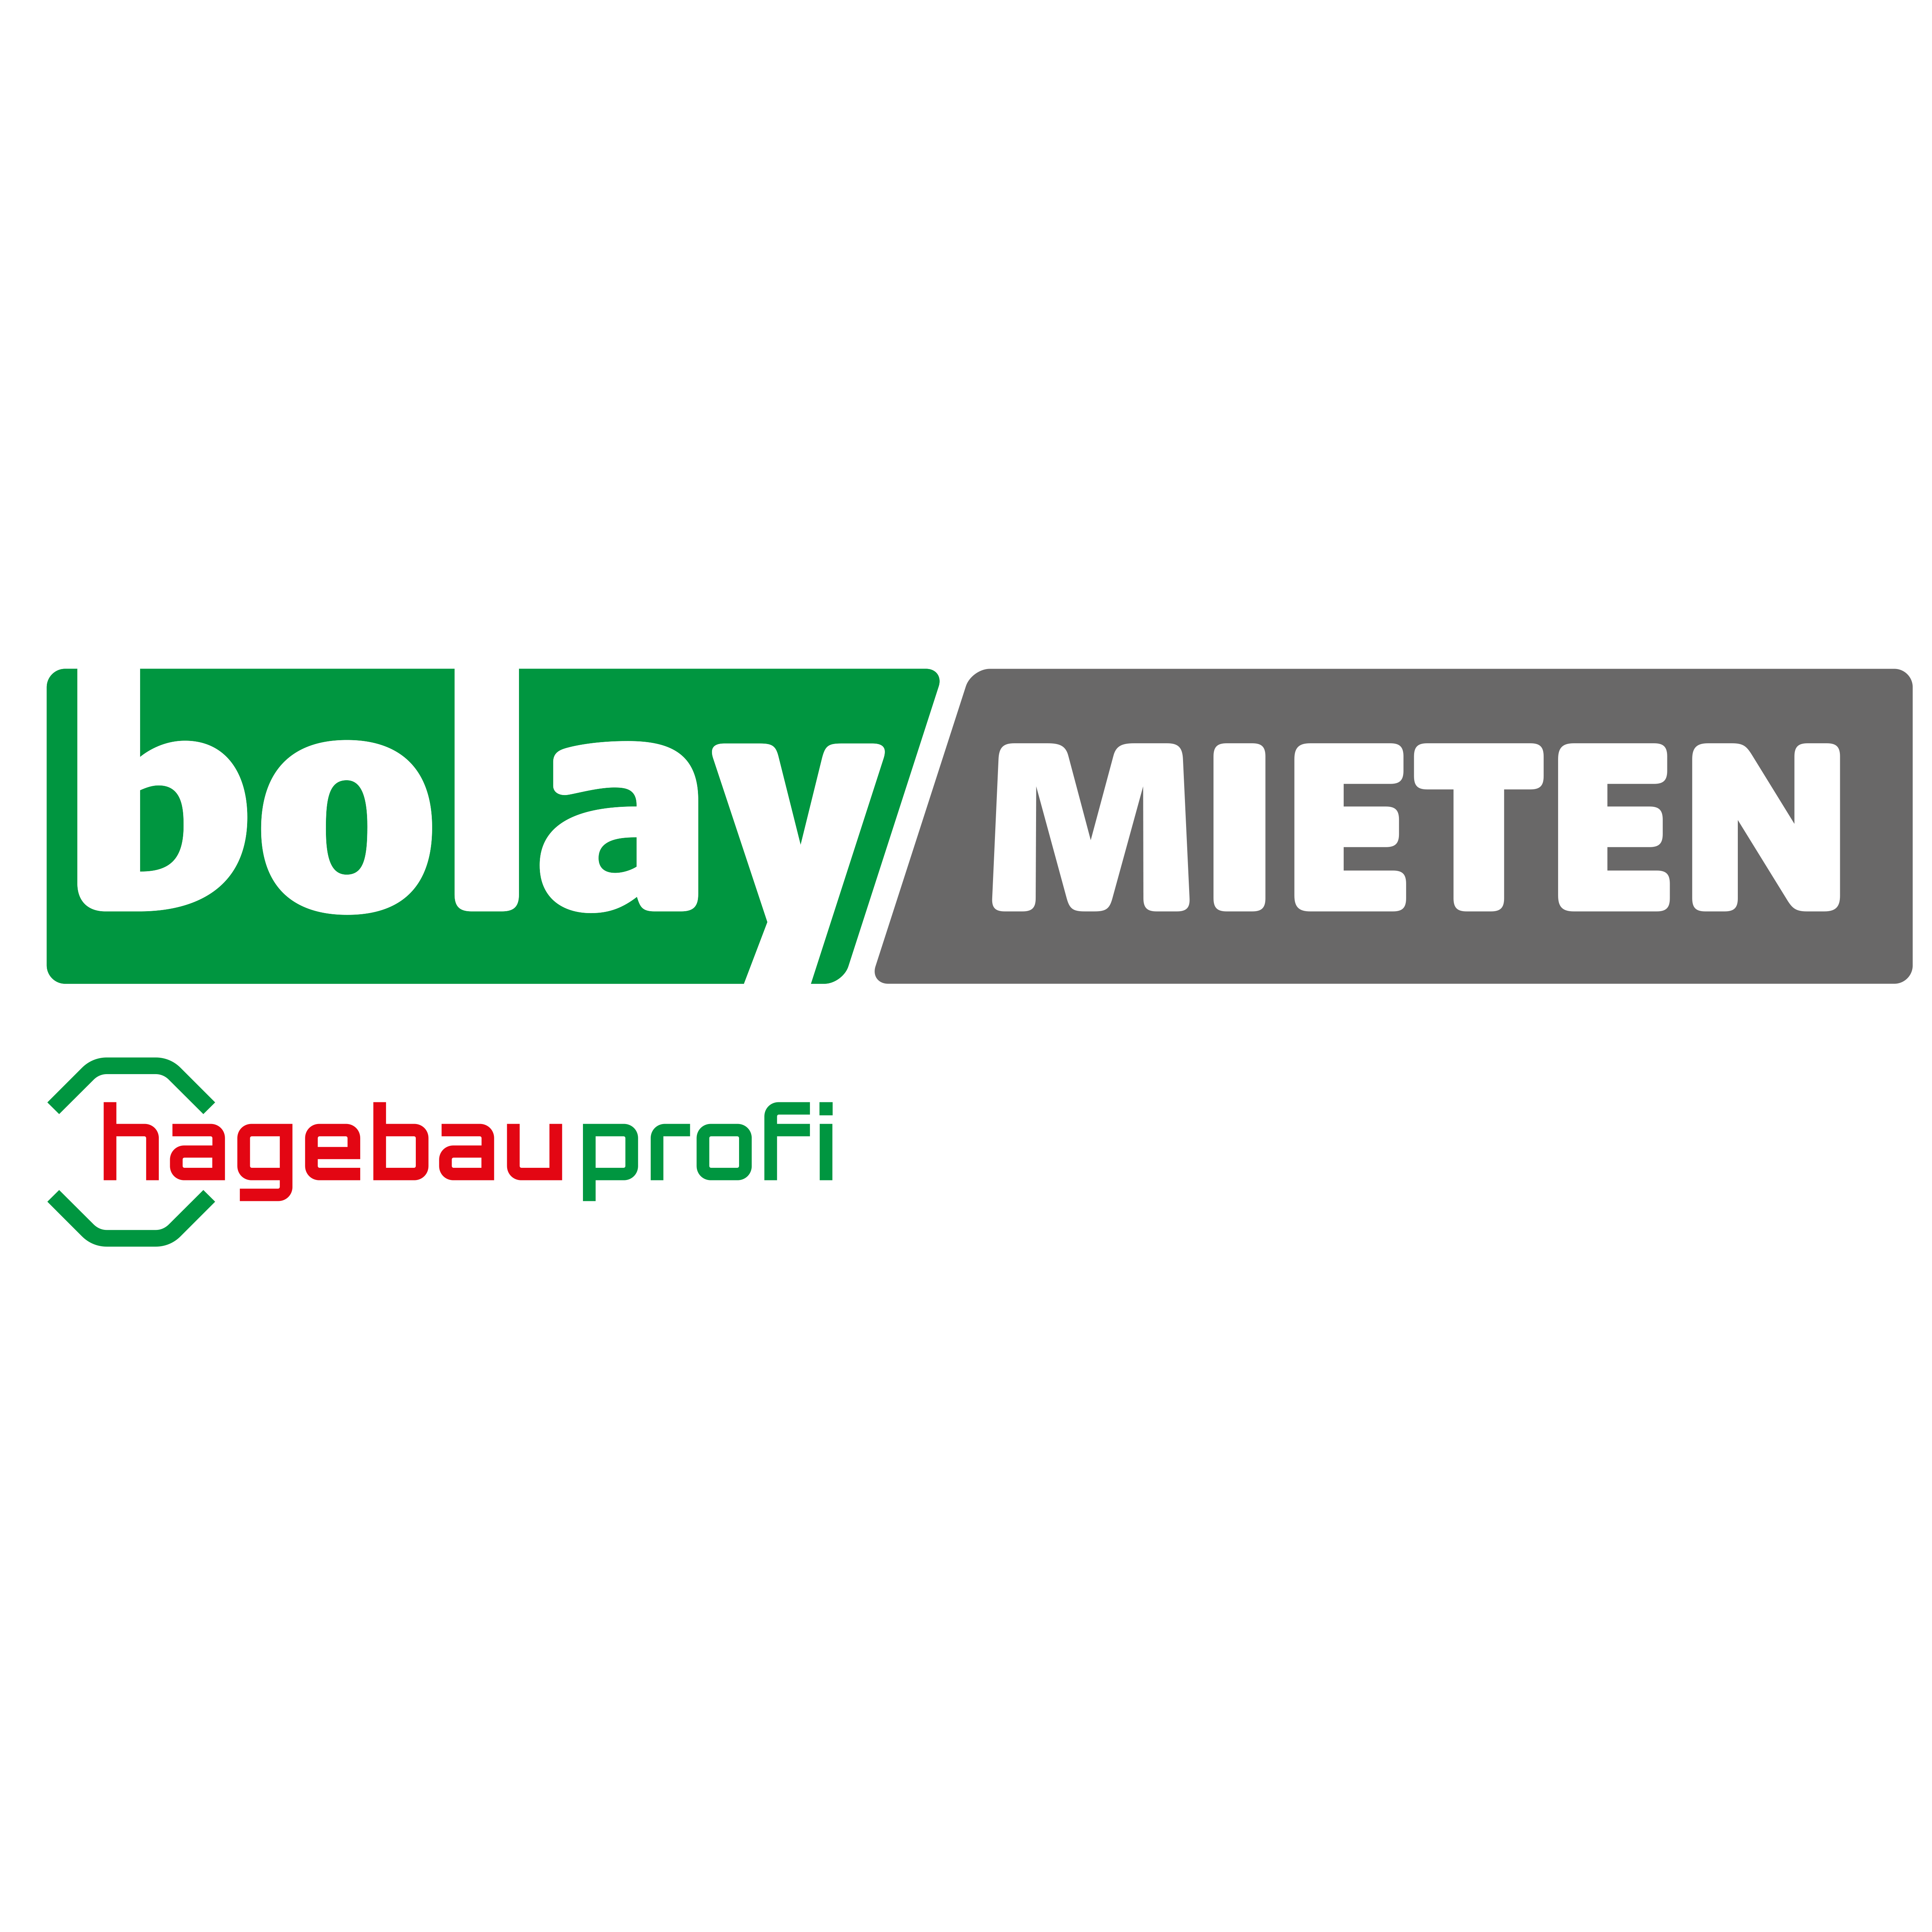 hagebau bolay / Mietpark in Rutesheim - Logo